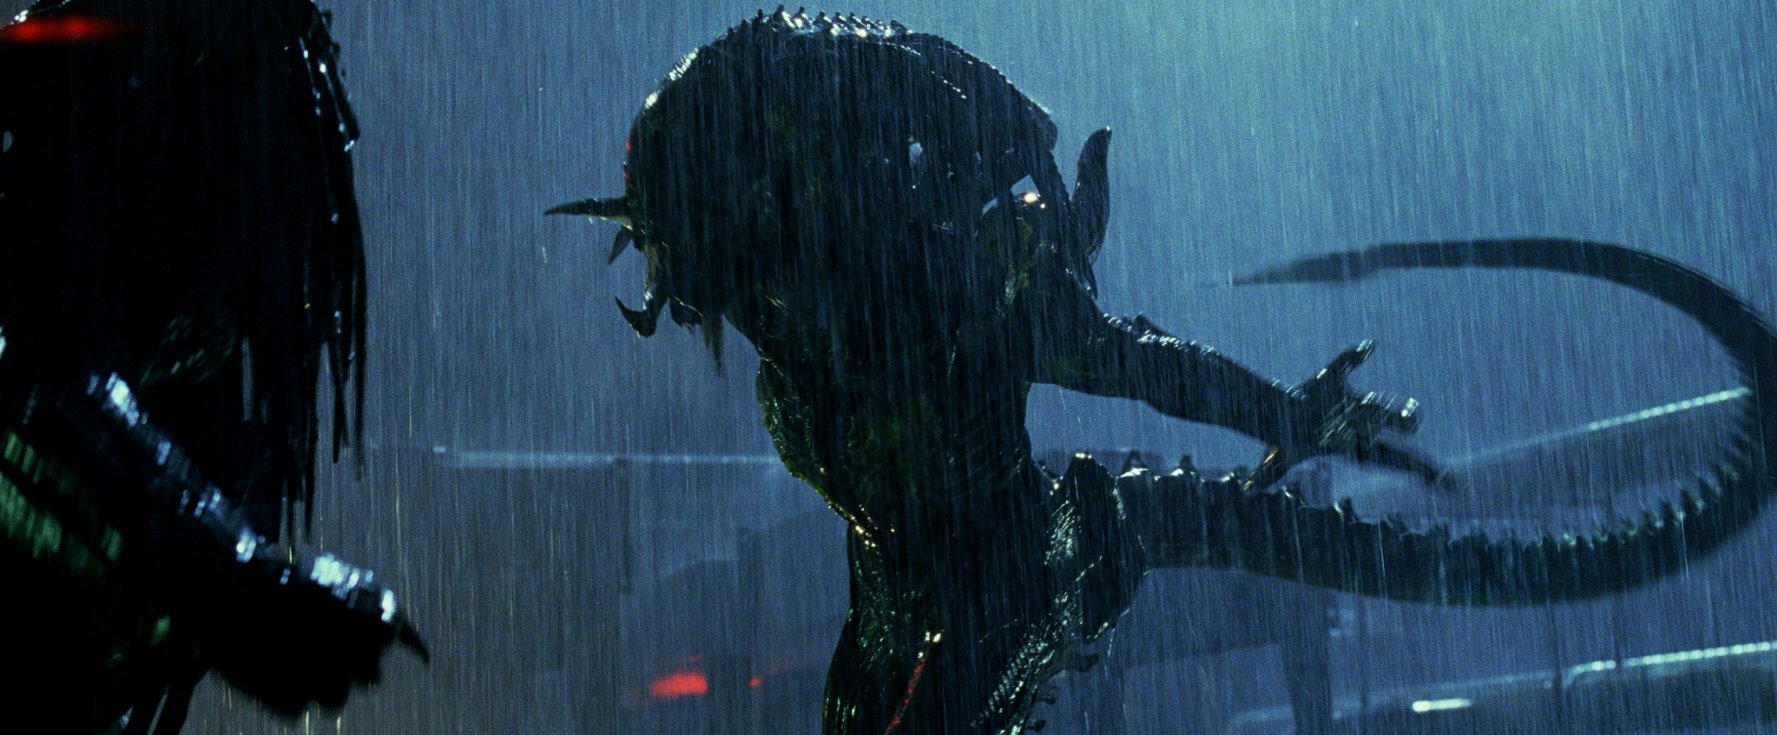 download alien vs predator requiem movie